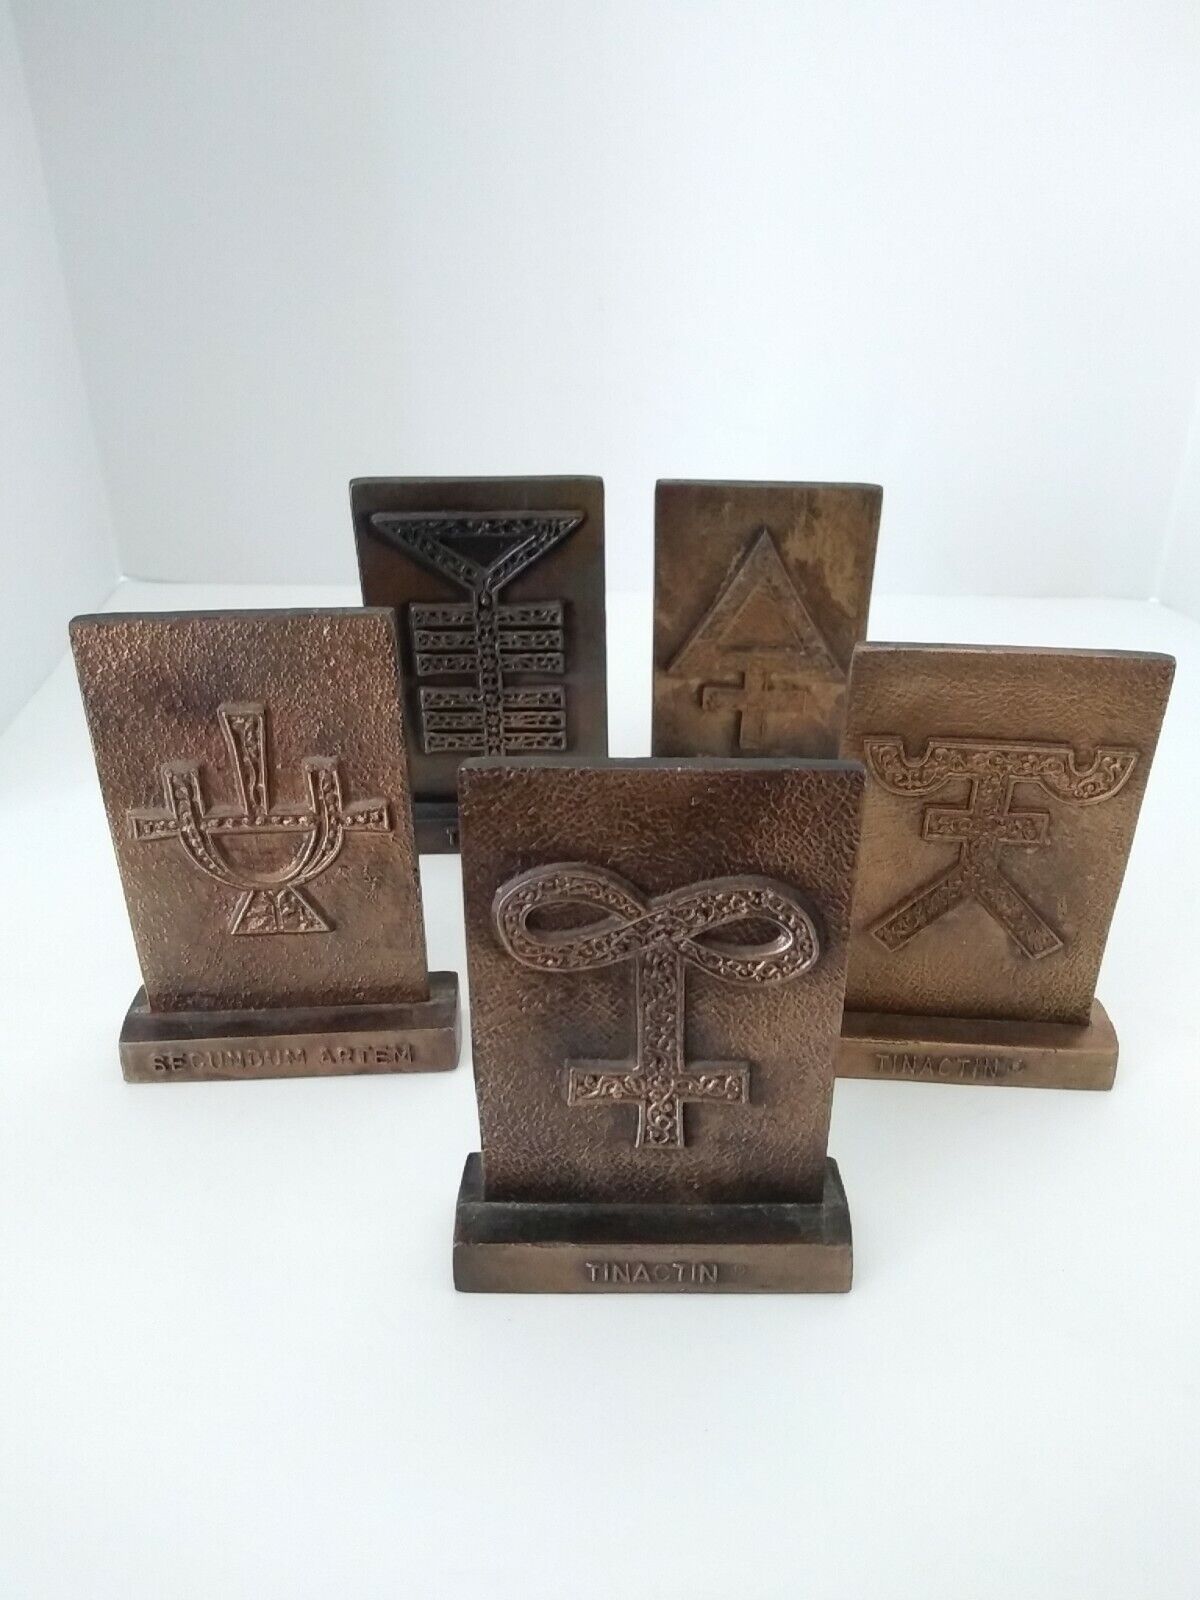 1977-81 Tinactin Apothecary Symbols Pharmacy Bronze Metal Paperweight Bookends 